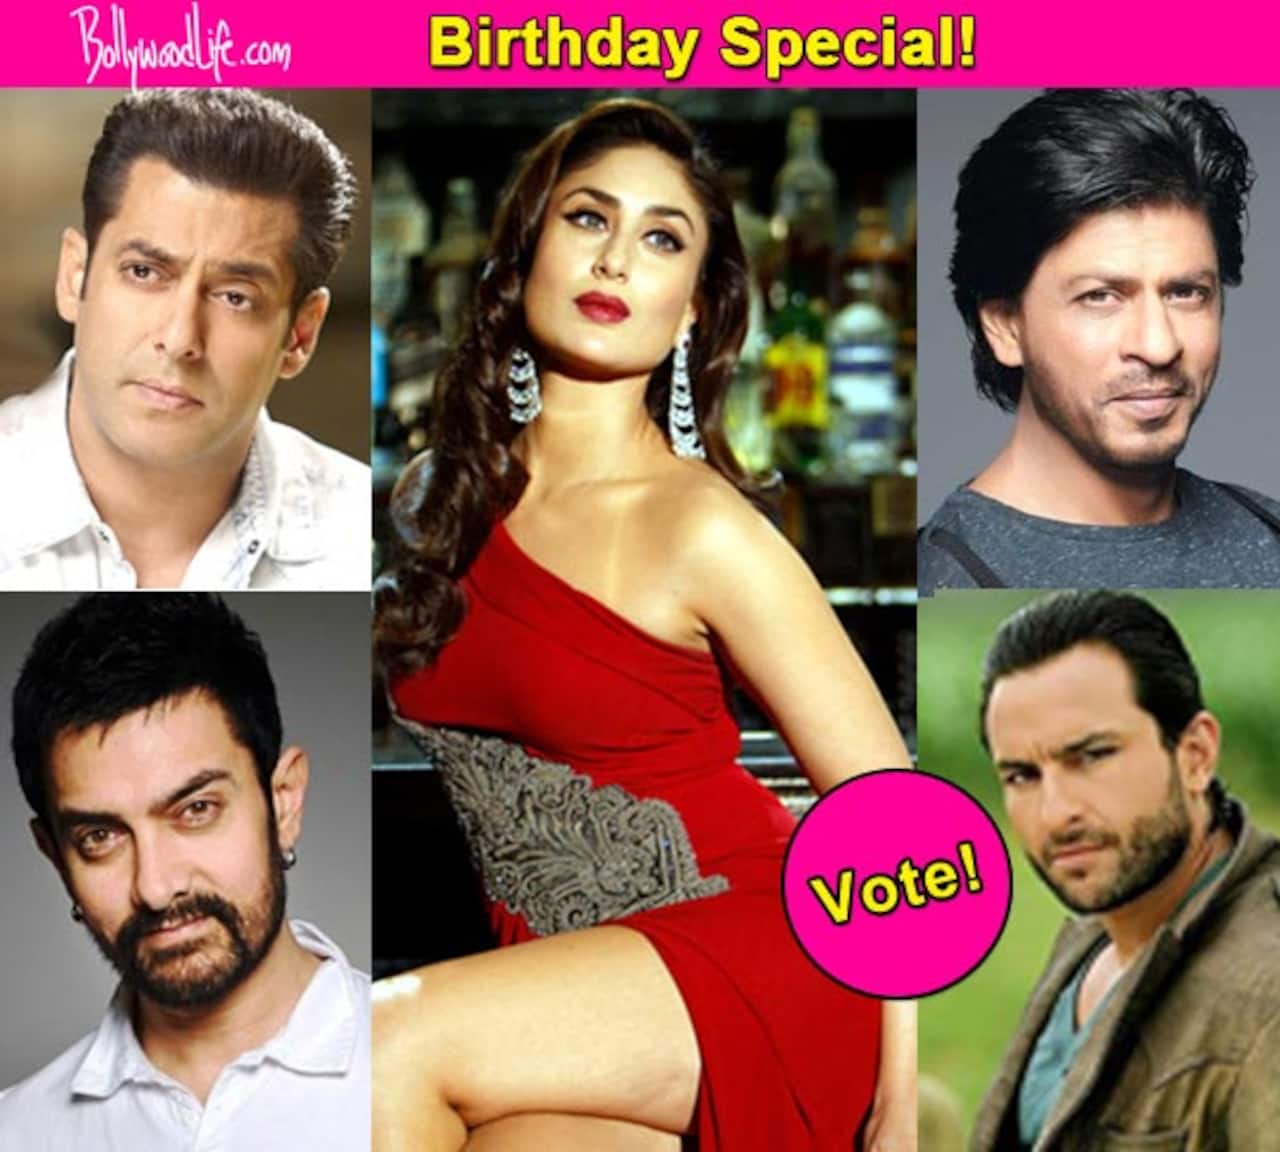 Birthday Special: Salman Khan, Shah Rukh Khan, Saif Ali Khan - who looks the best with Kareena Kapoor Khan?